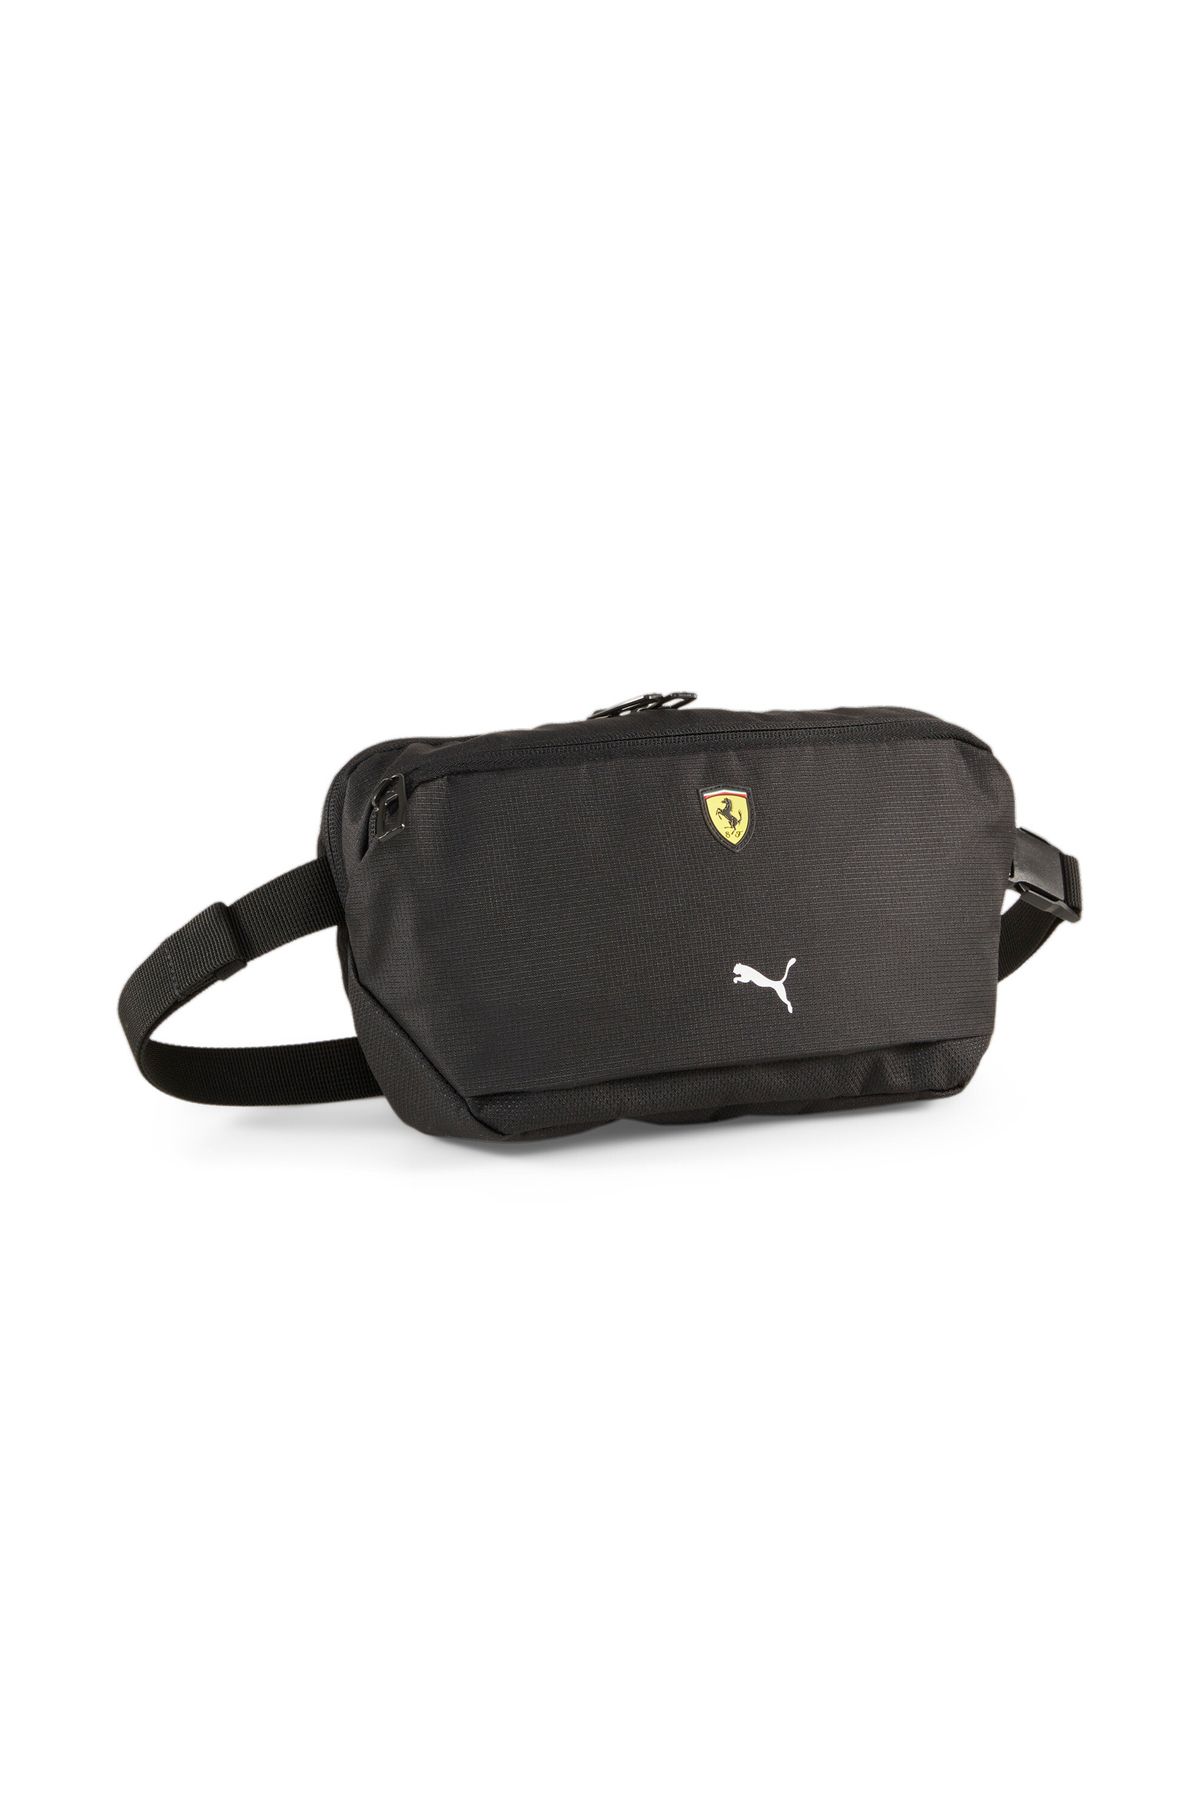 Puma Ferrari Race Waist Bag Bel Çantası 9029402 Siyah